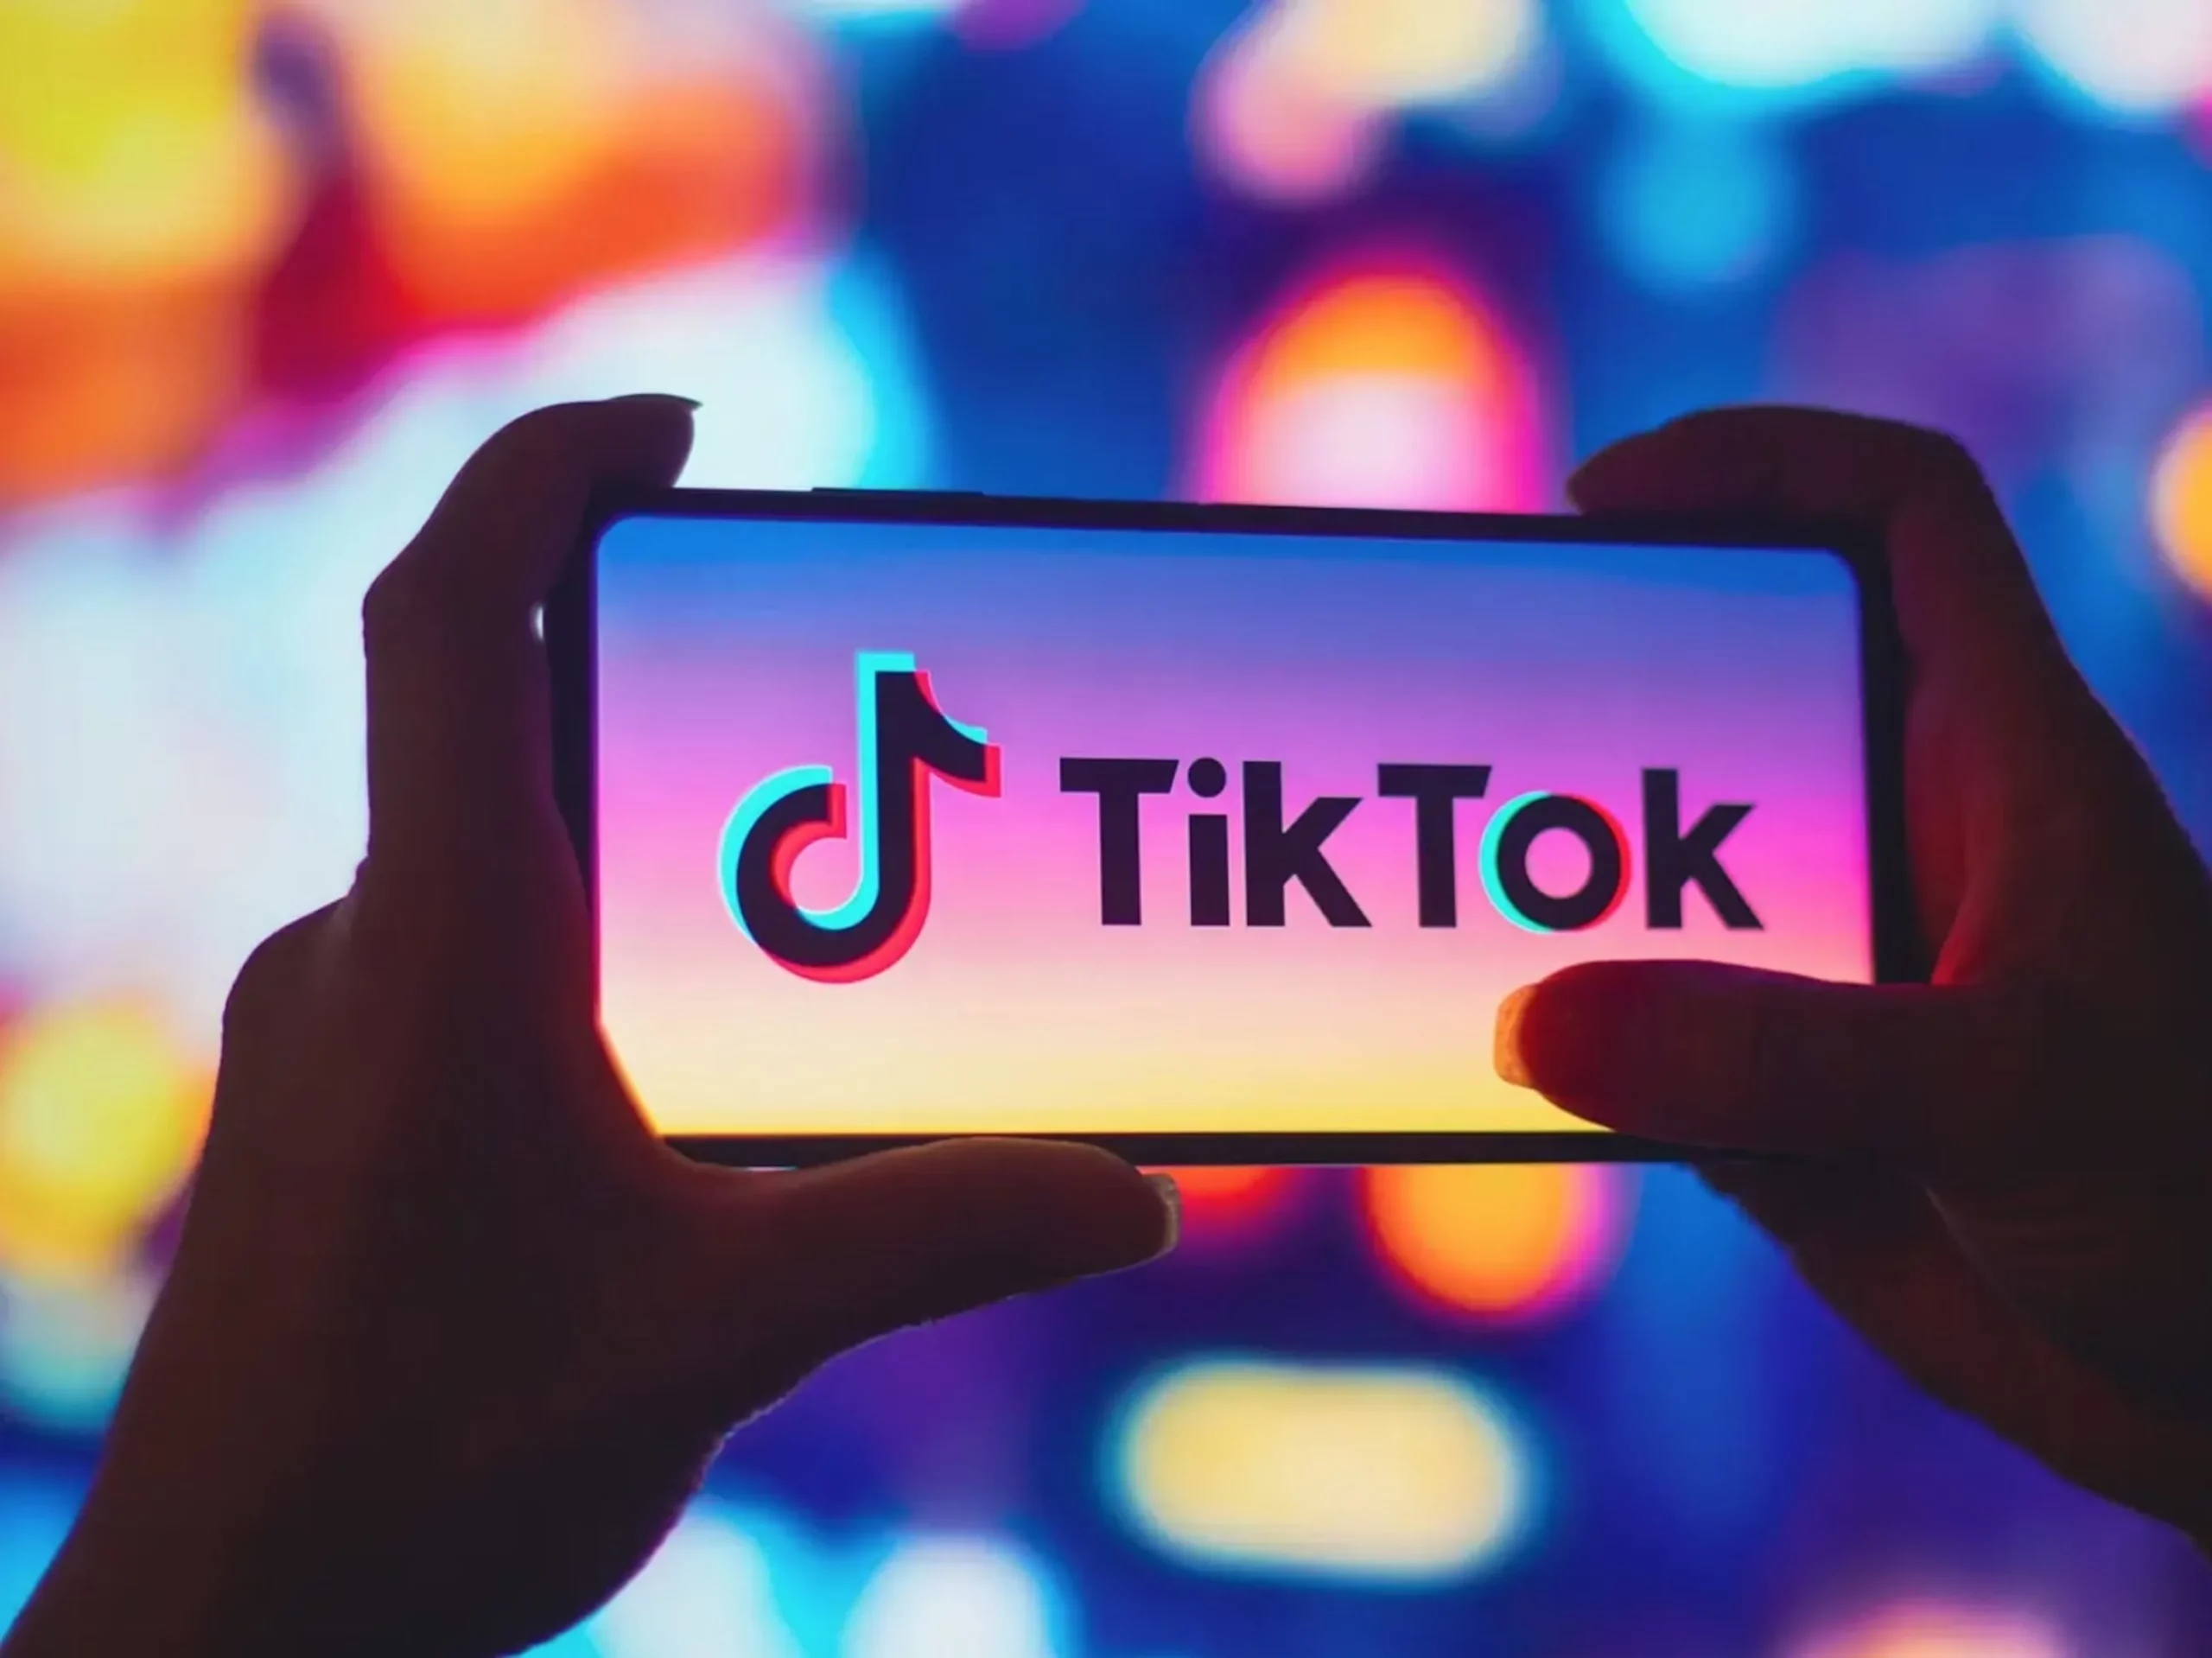 TikTok preocupa gracias al nuevo reto viral de desaparecer por 48 horas